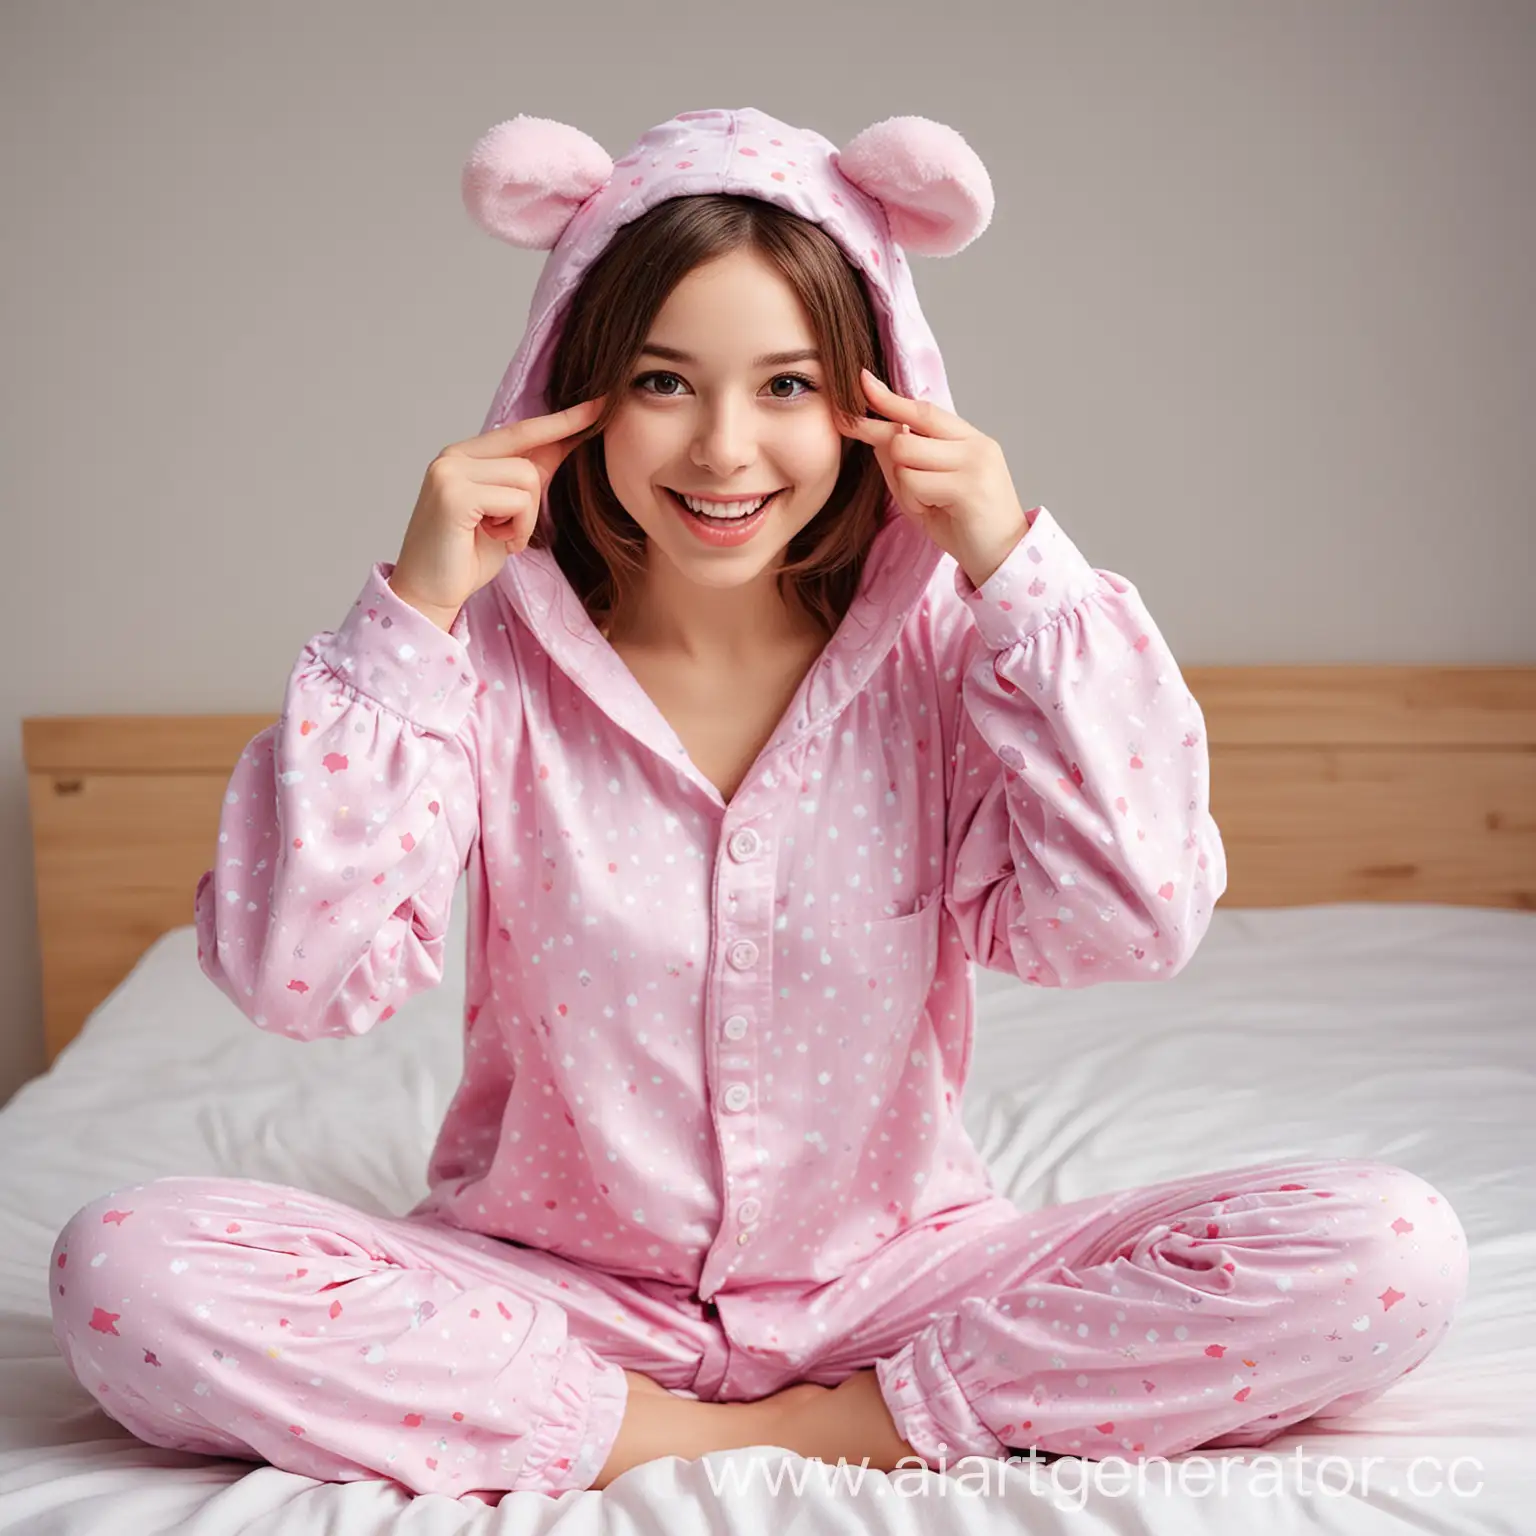 Cheerful-Girl-in-Pajamas-Kigurumi-Posing-with-Teddy-Bear